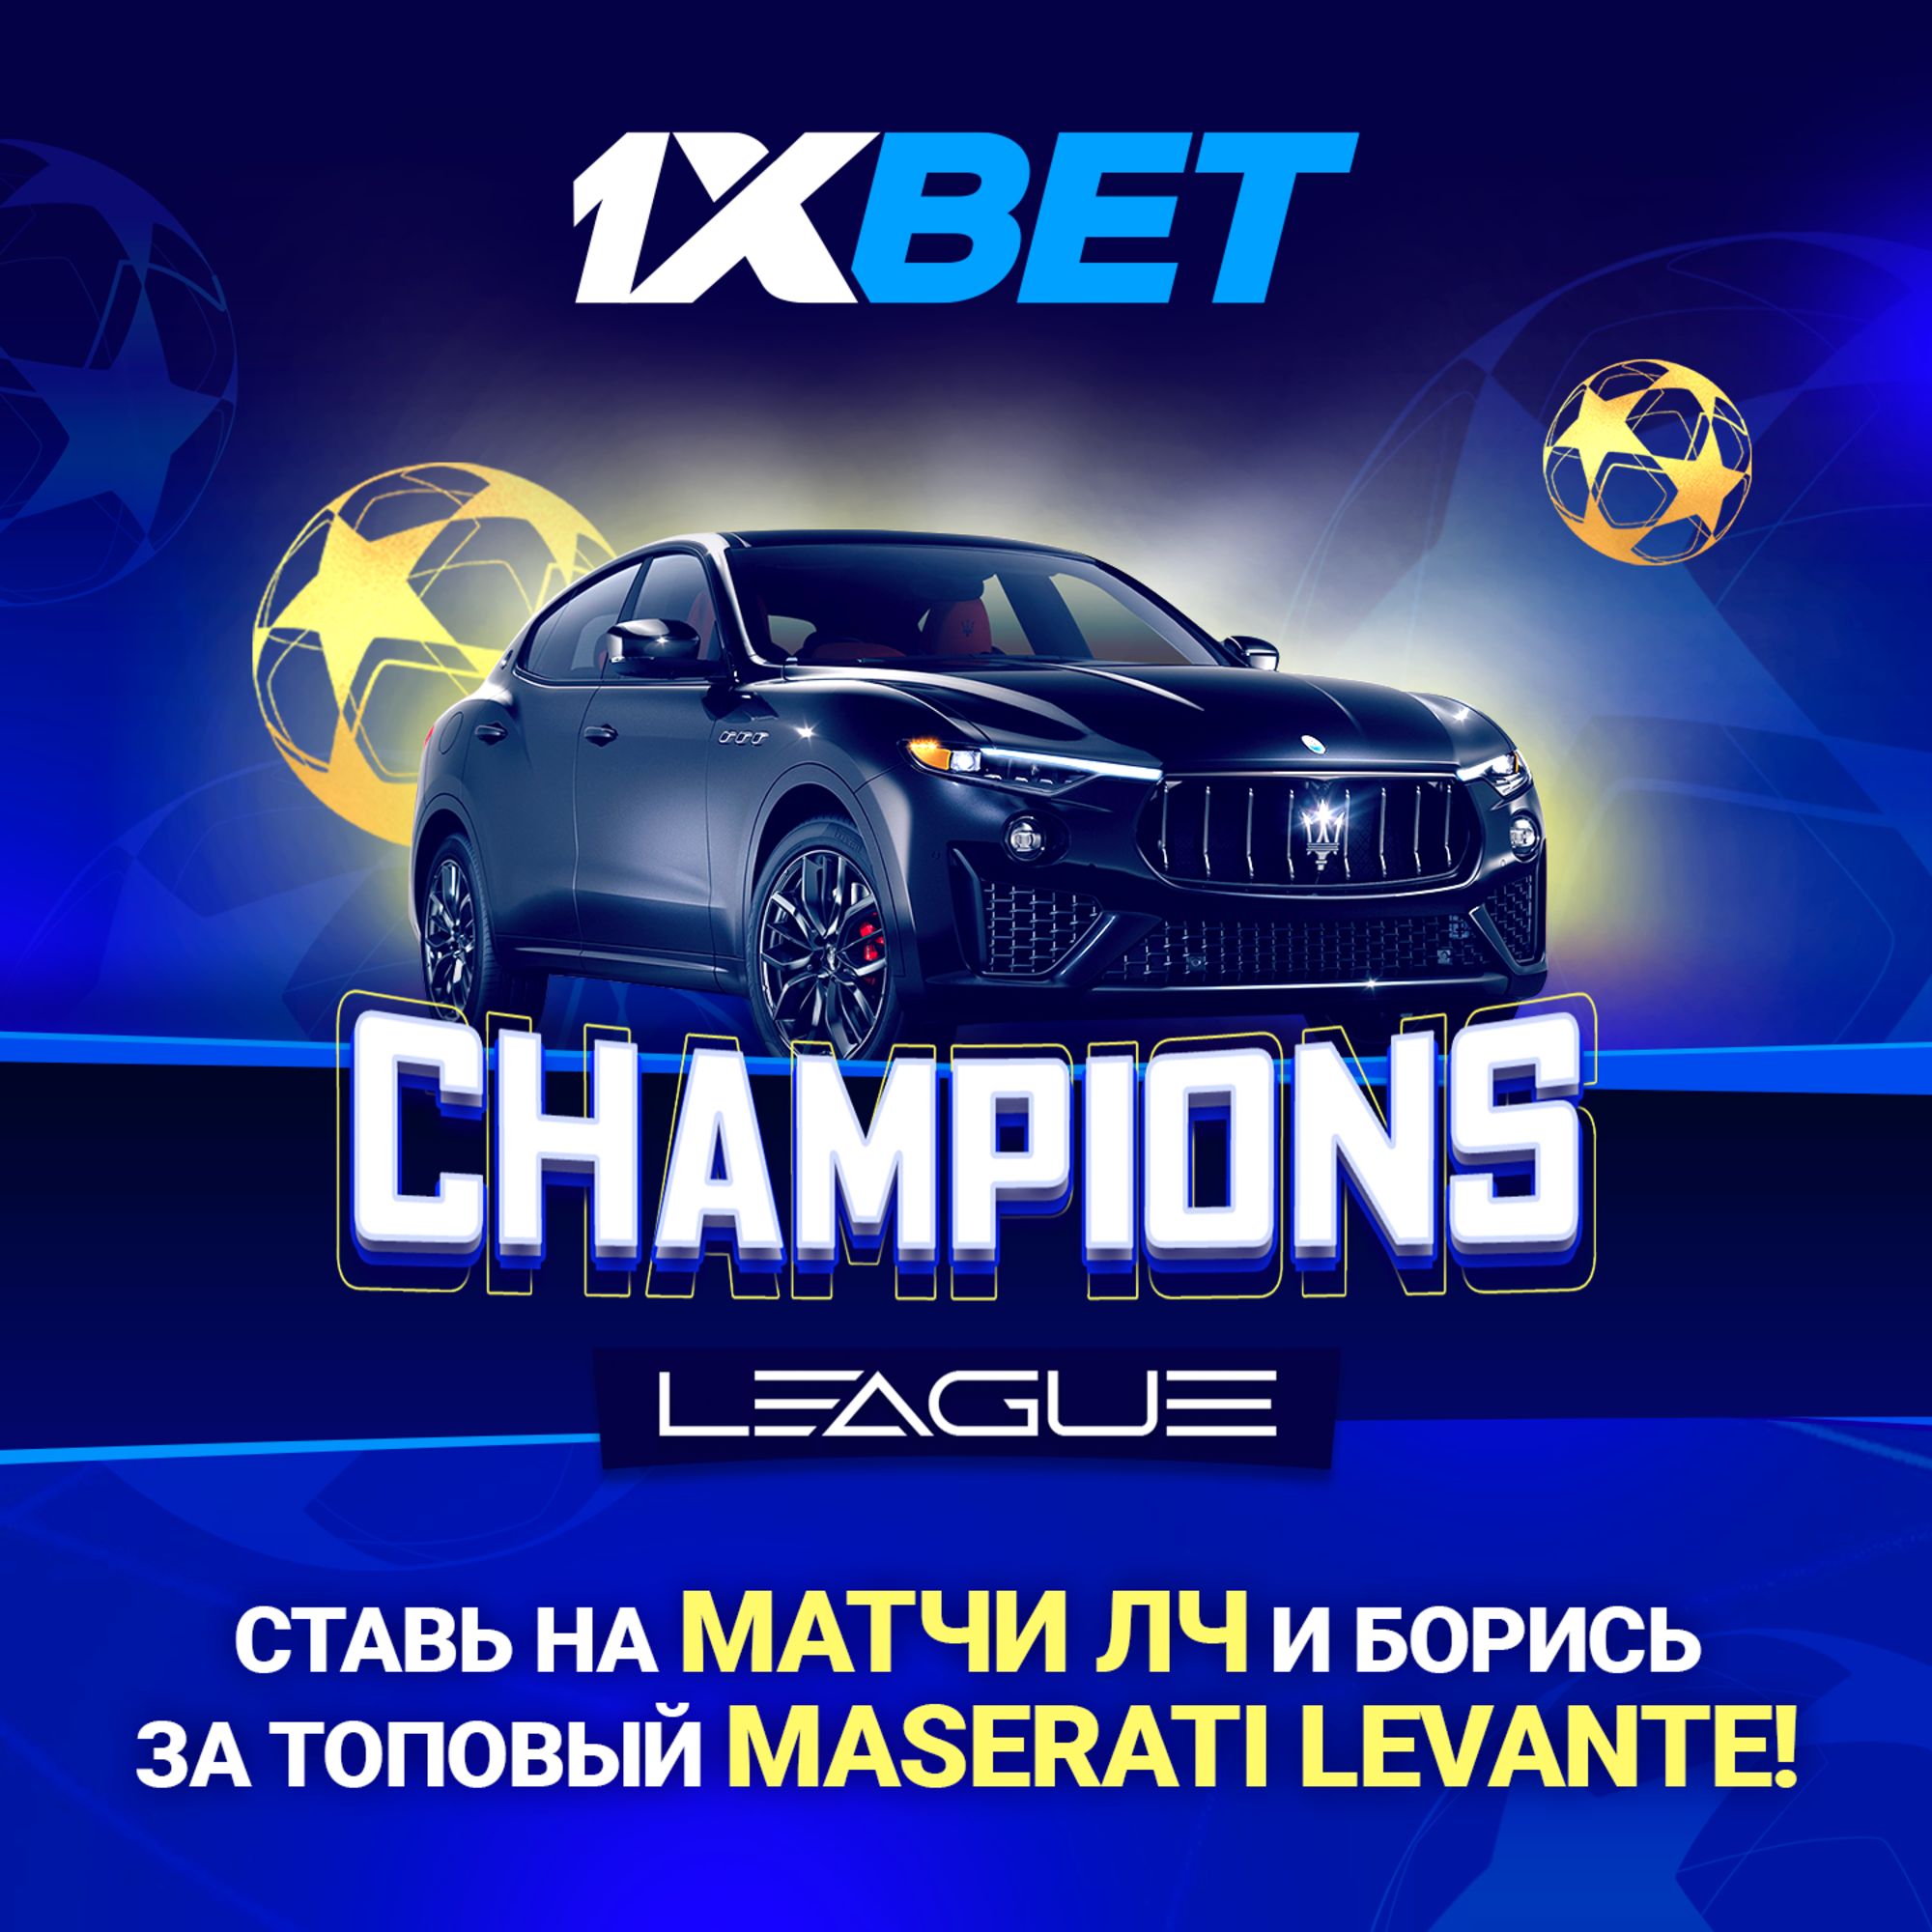 1xBet разыгрывает Maserati Levante за ставки на матчи Лиги Чемпионов